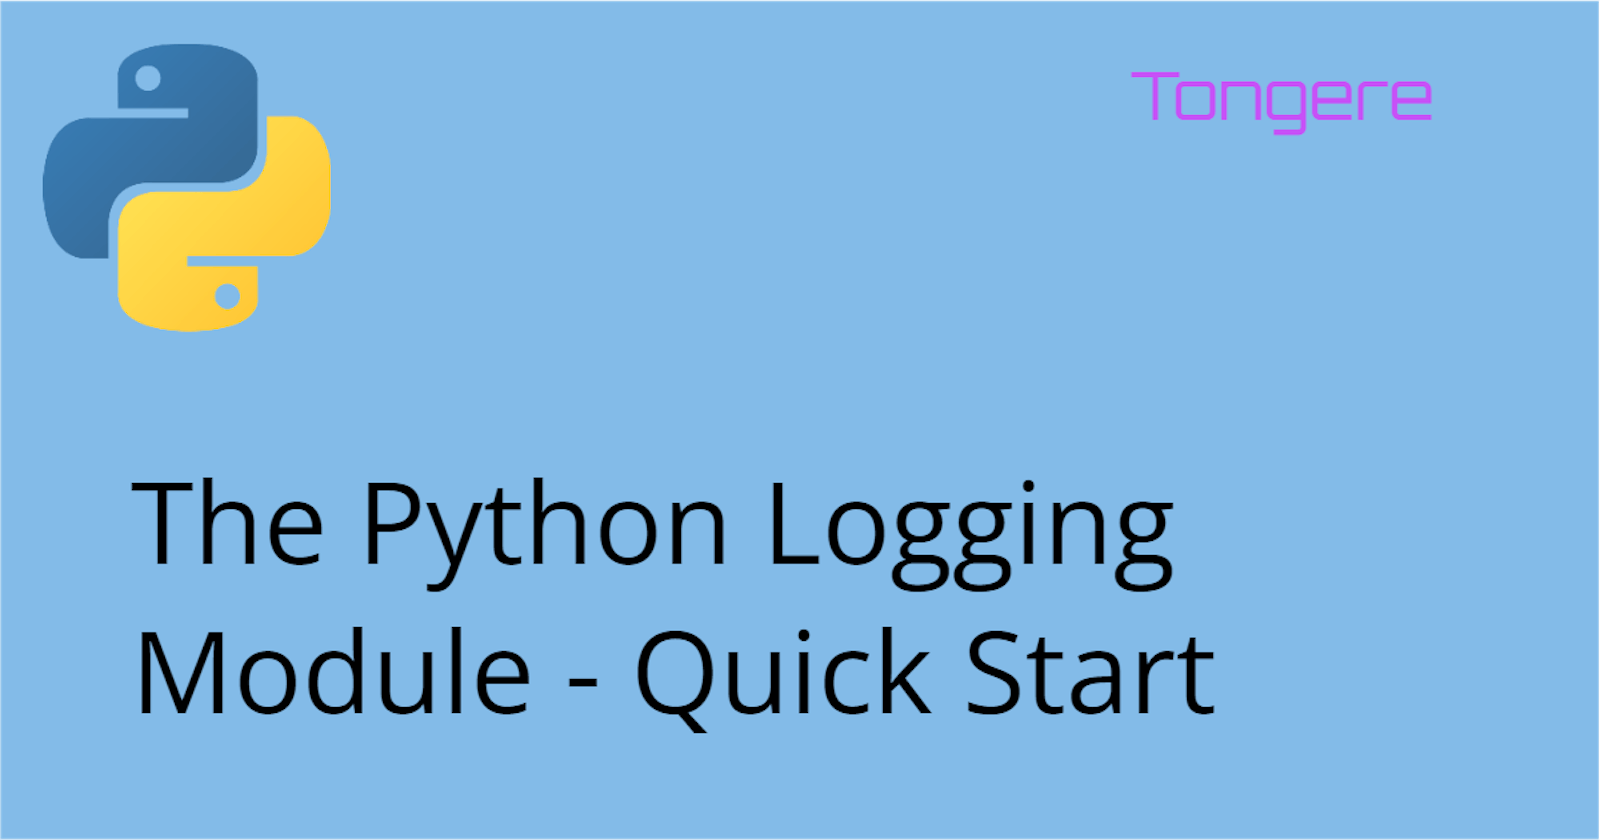 The Python Logging Module